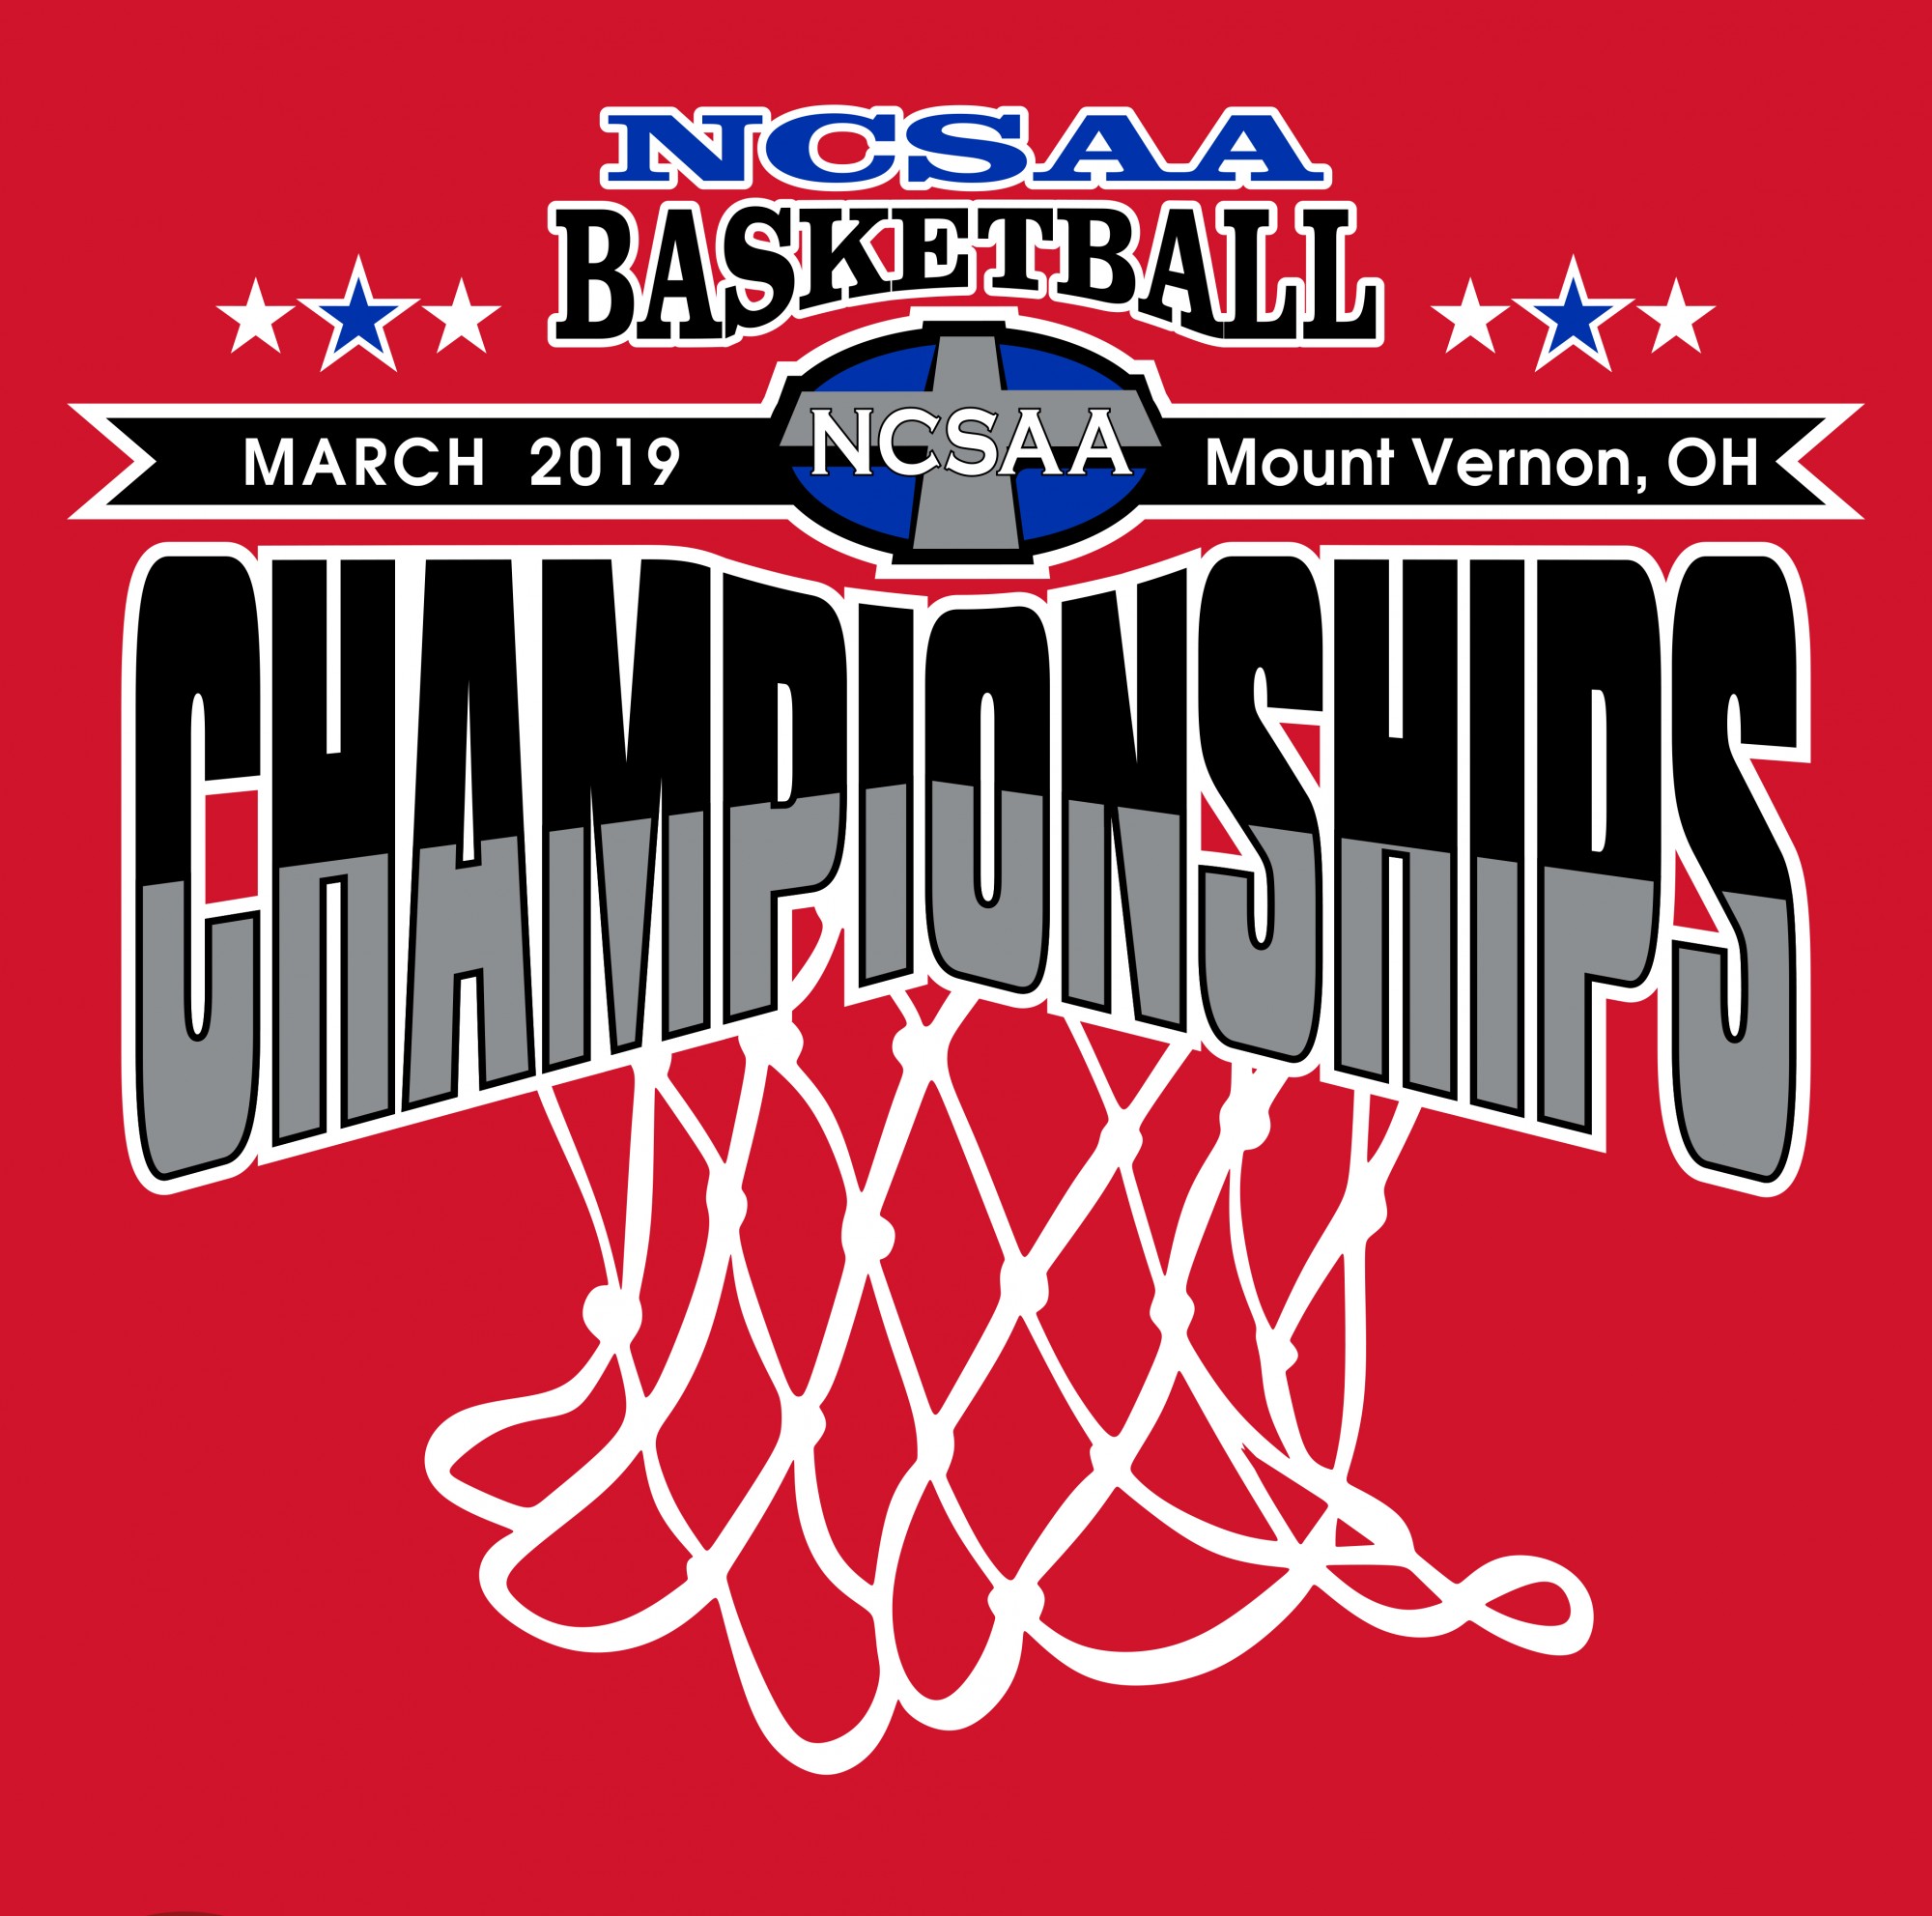 NCSAA Basketball Championships 2019